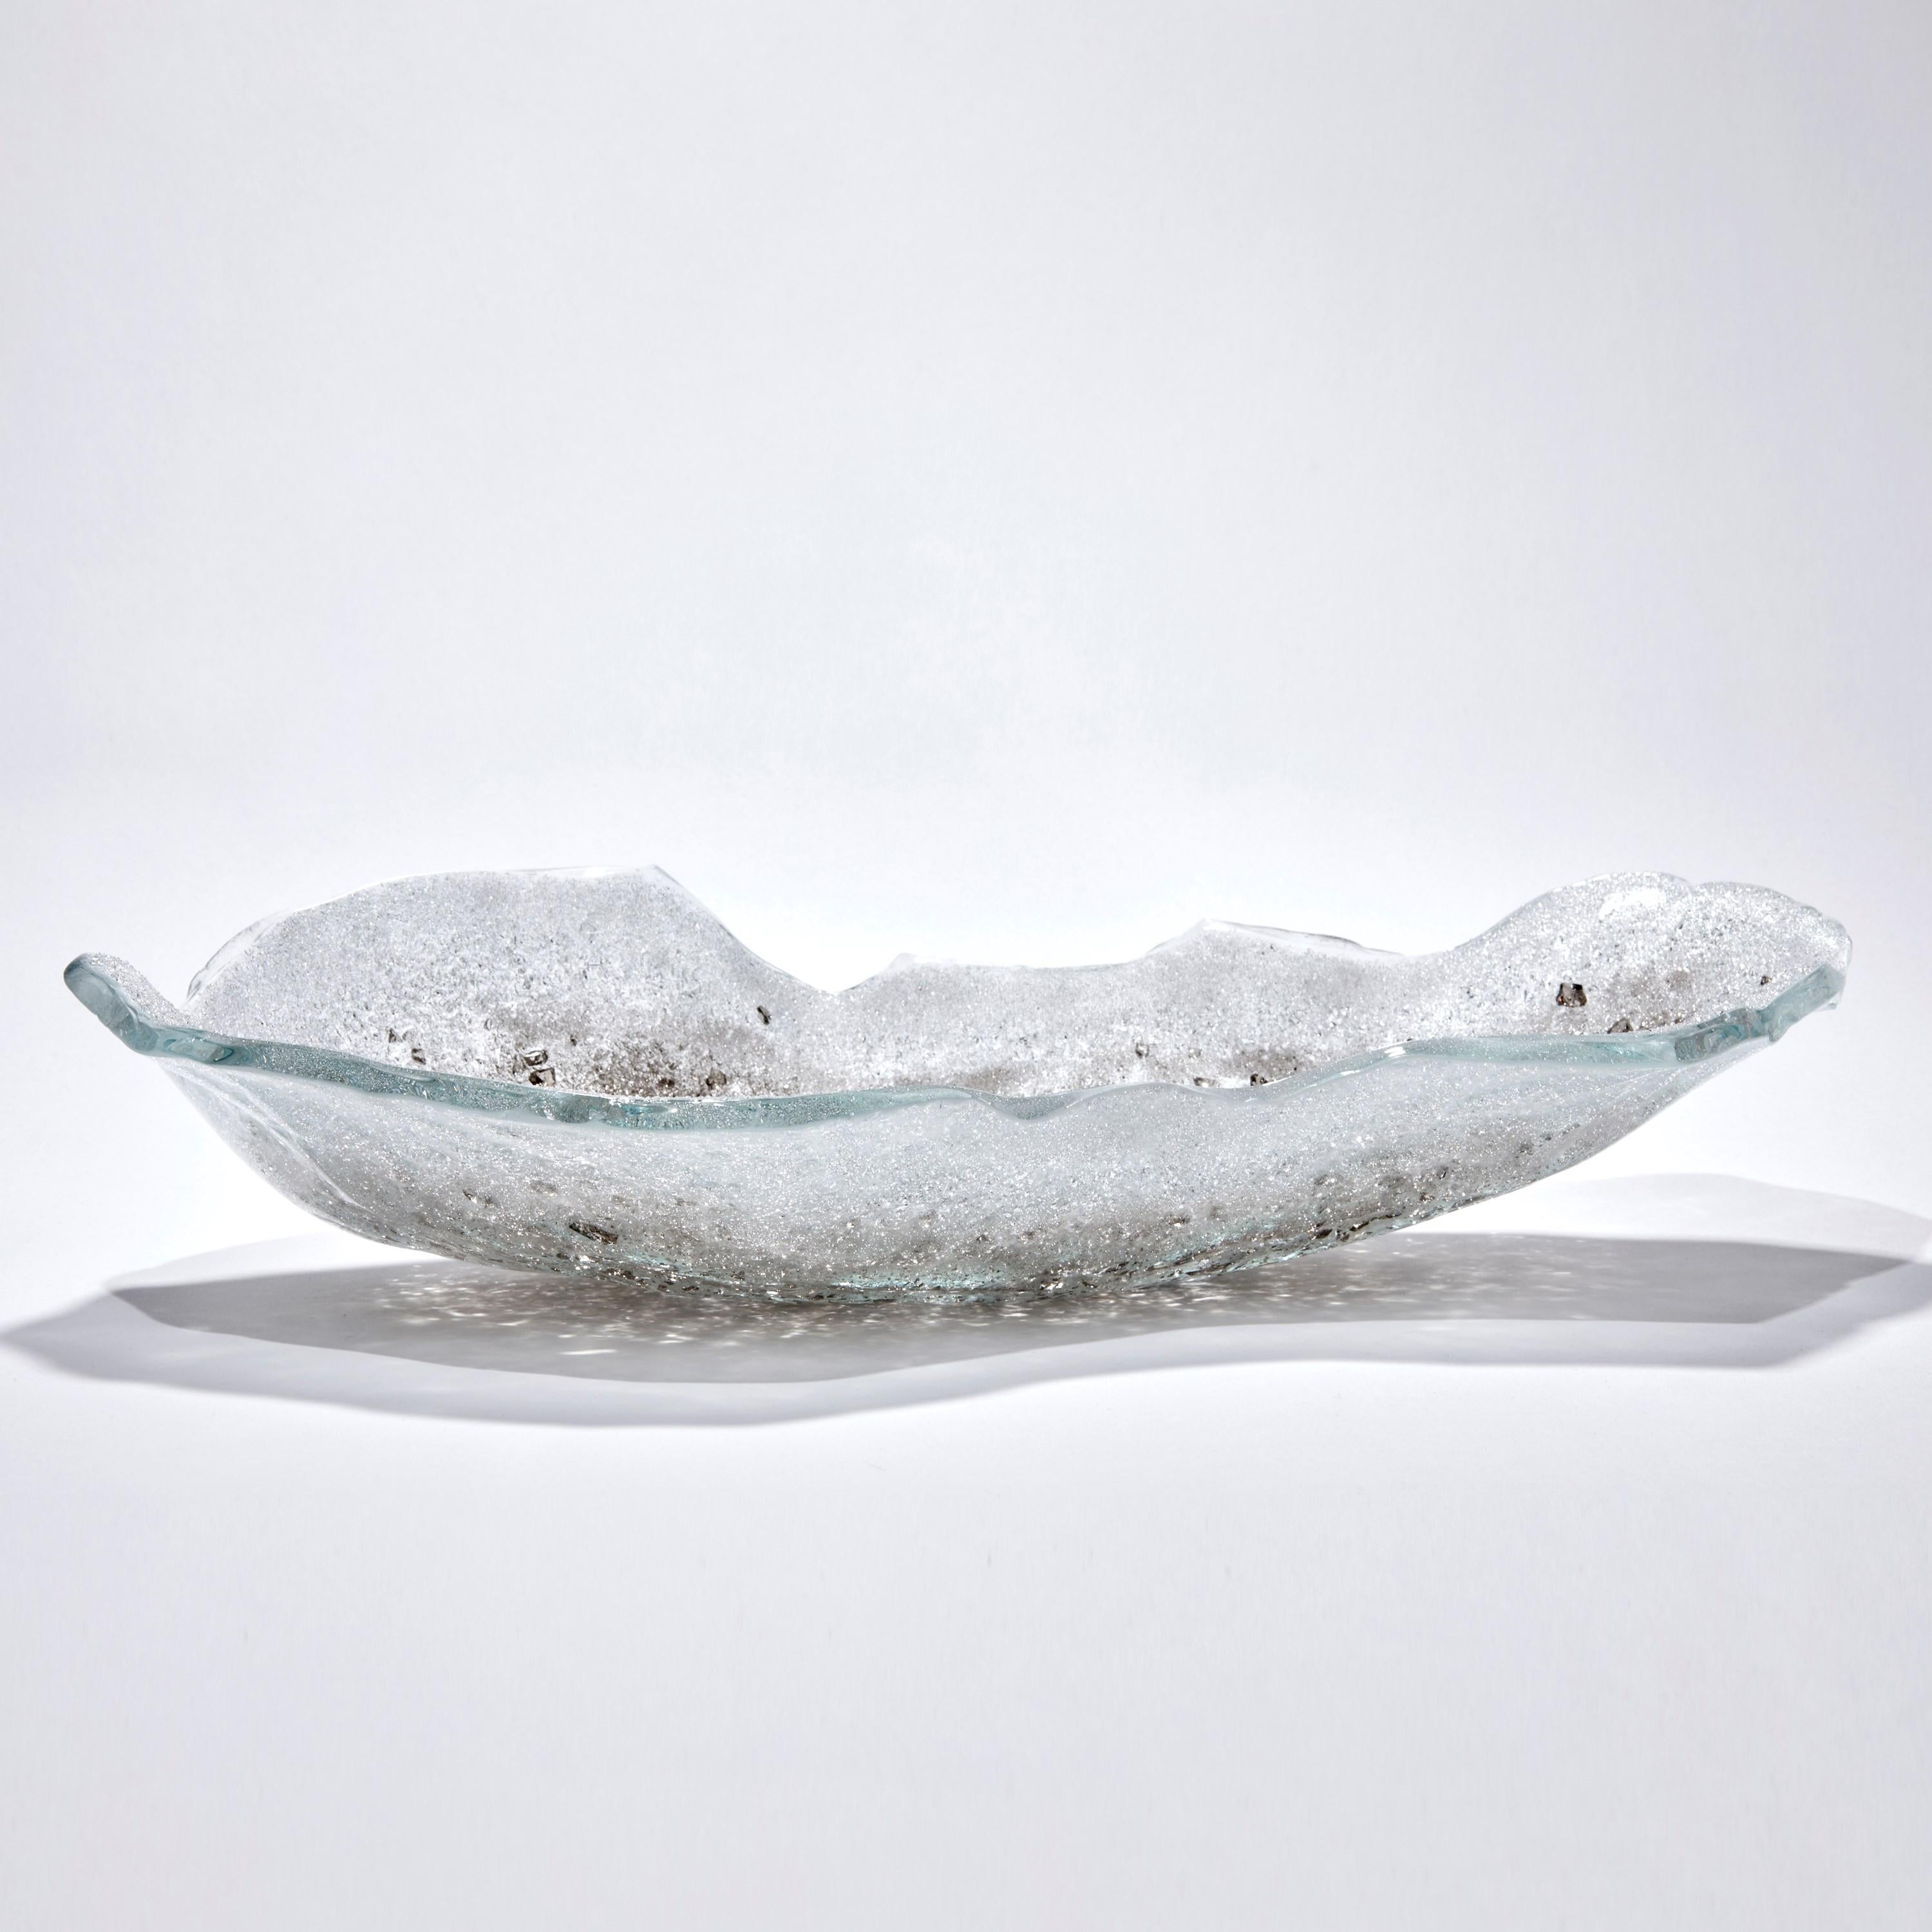 Organic Modern Celestine VI, a Bronze & Grey Sparkly Sculptural Centrepiece by Wayne Charmer